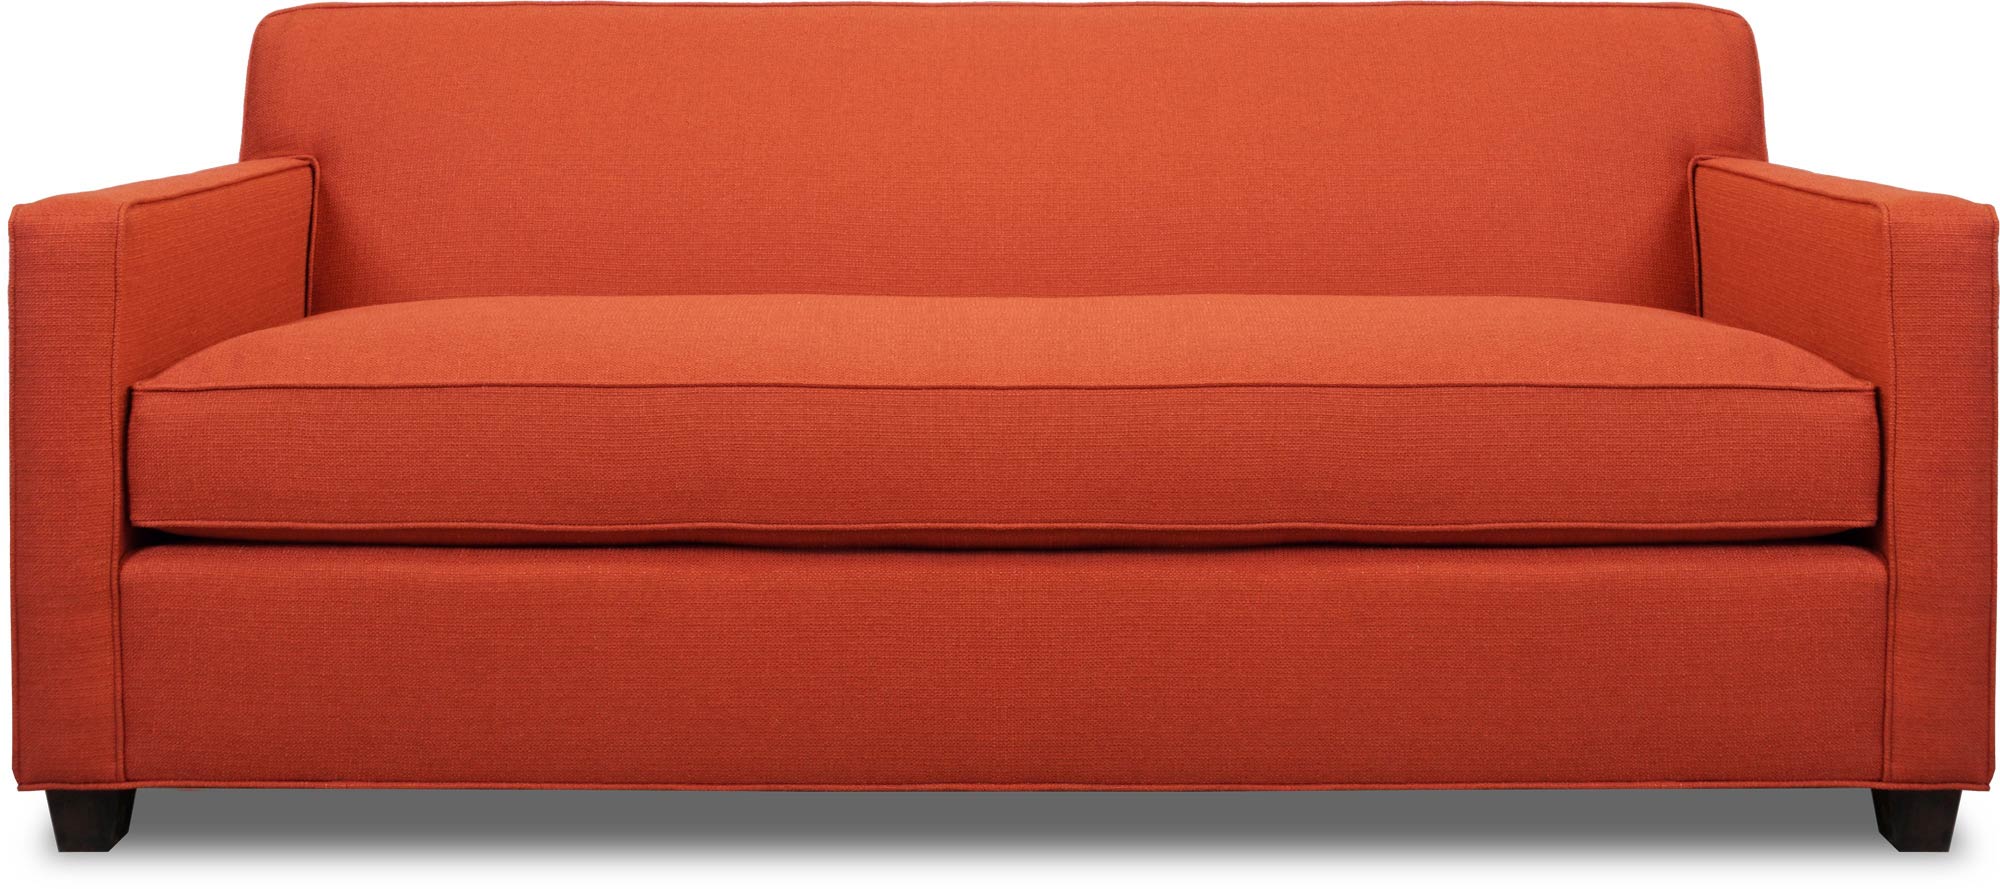 74 Bond sofa in Ludlow Russet performance fabric